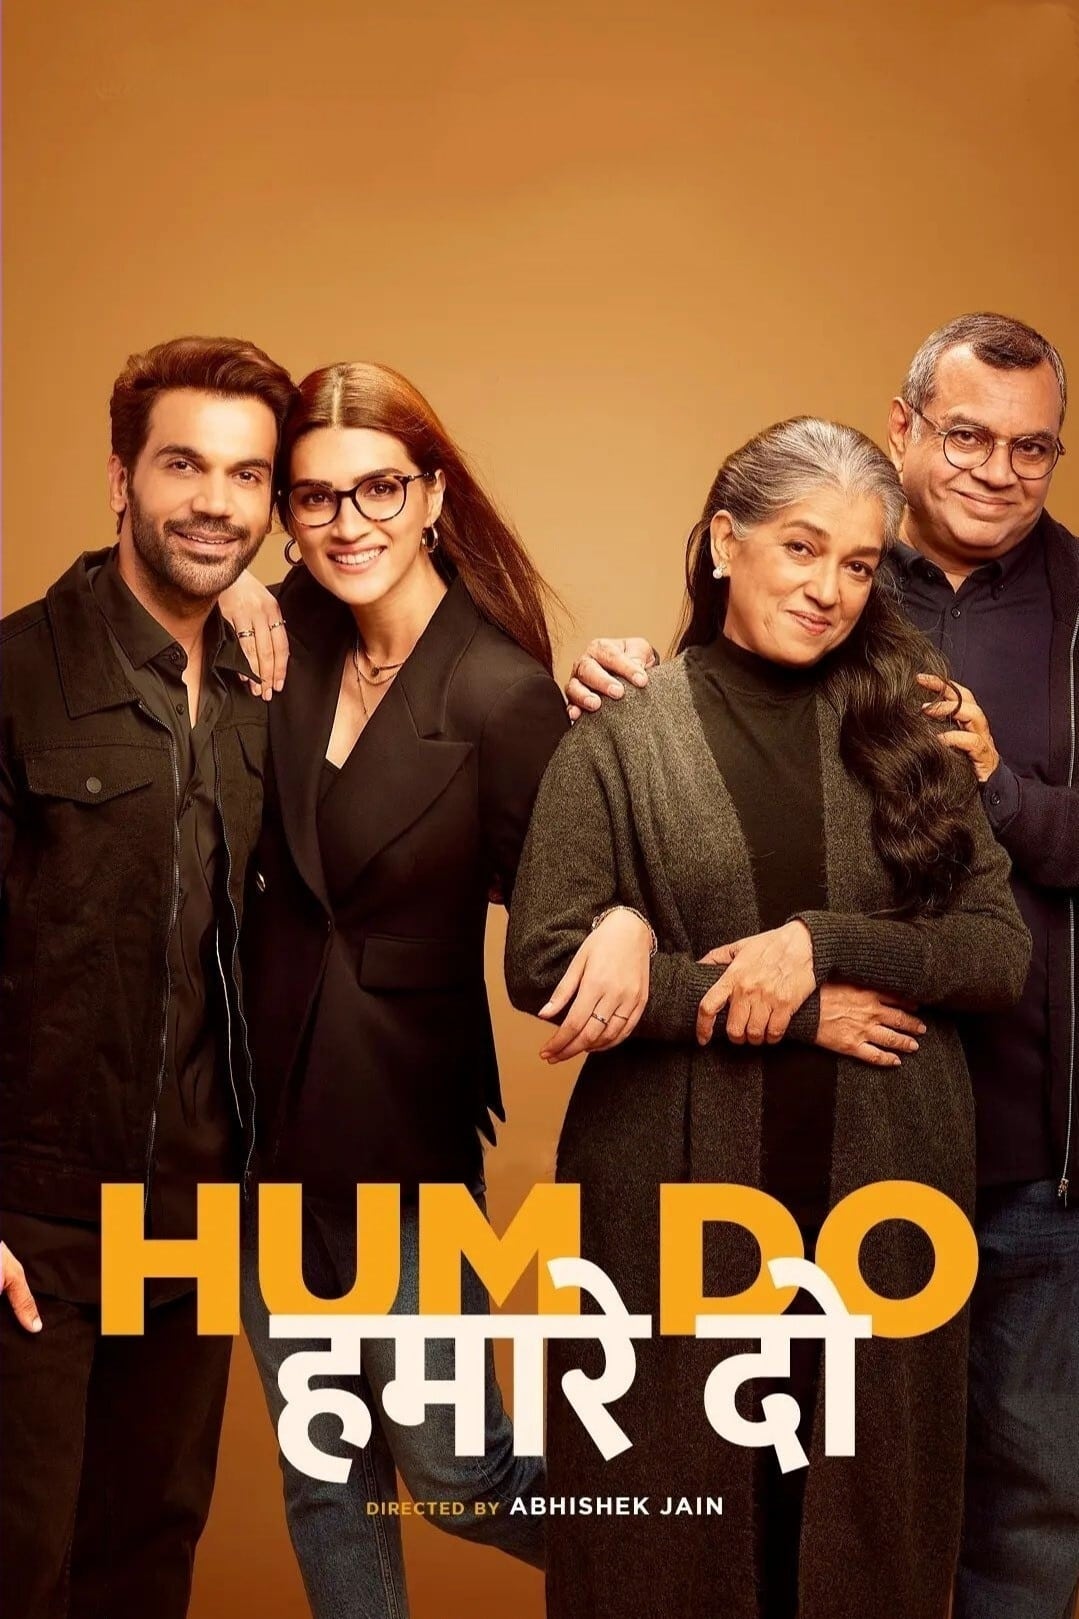 Poster for the movie "Hum Do Hamare Do"